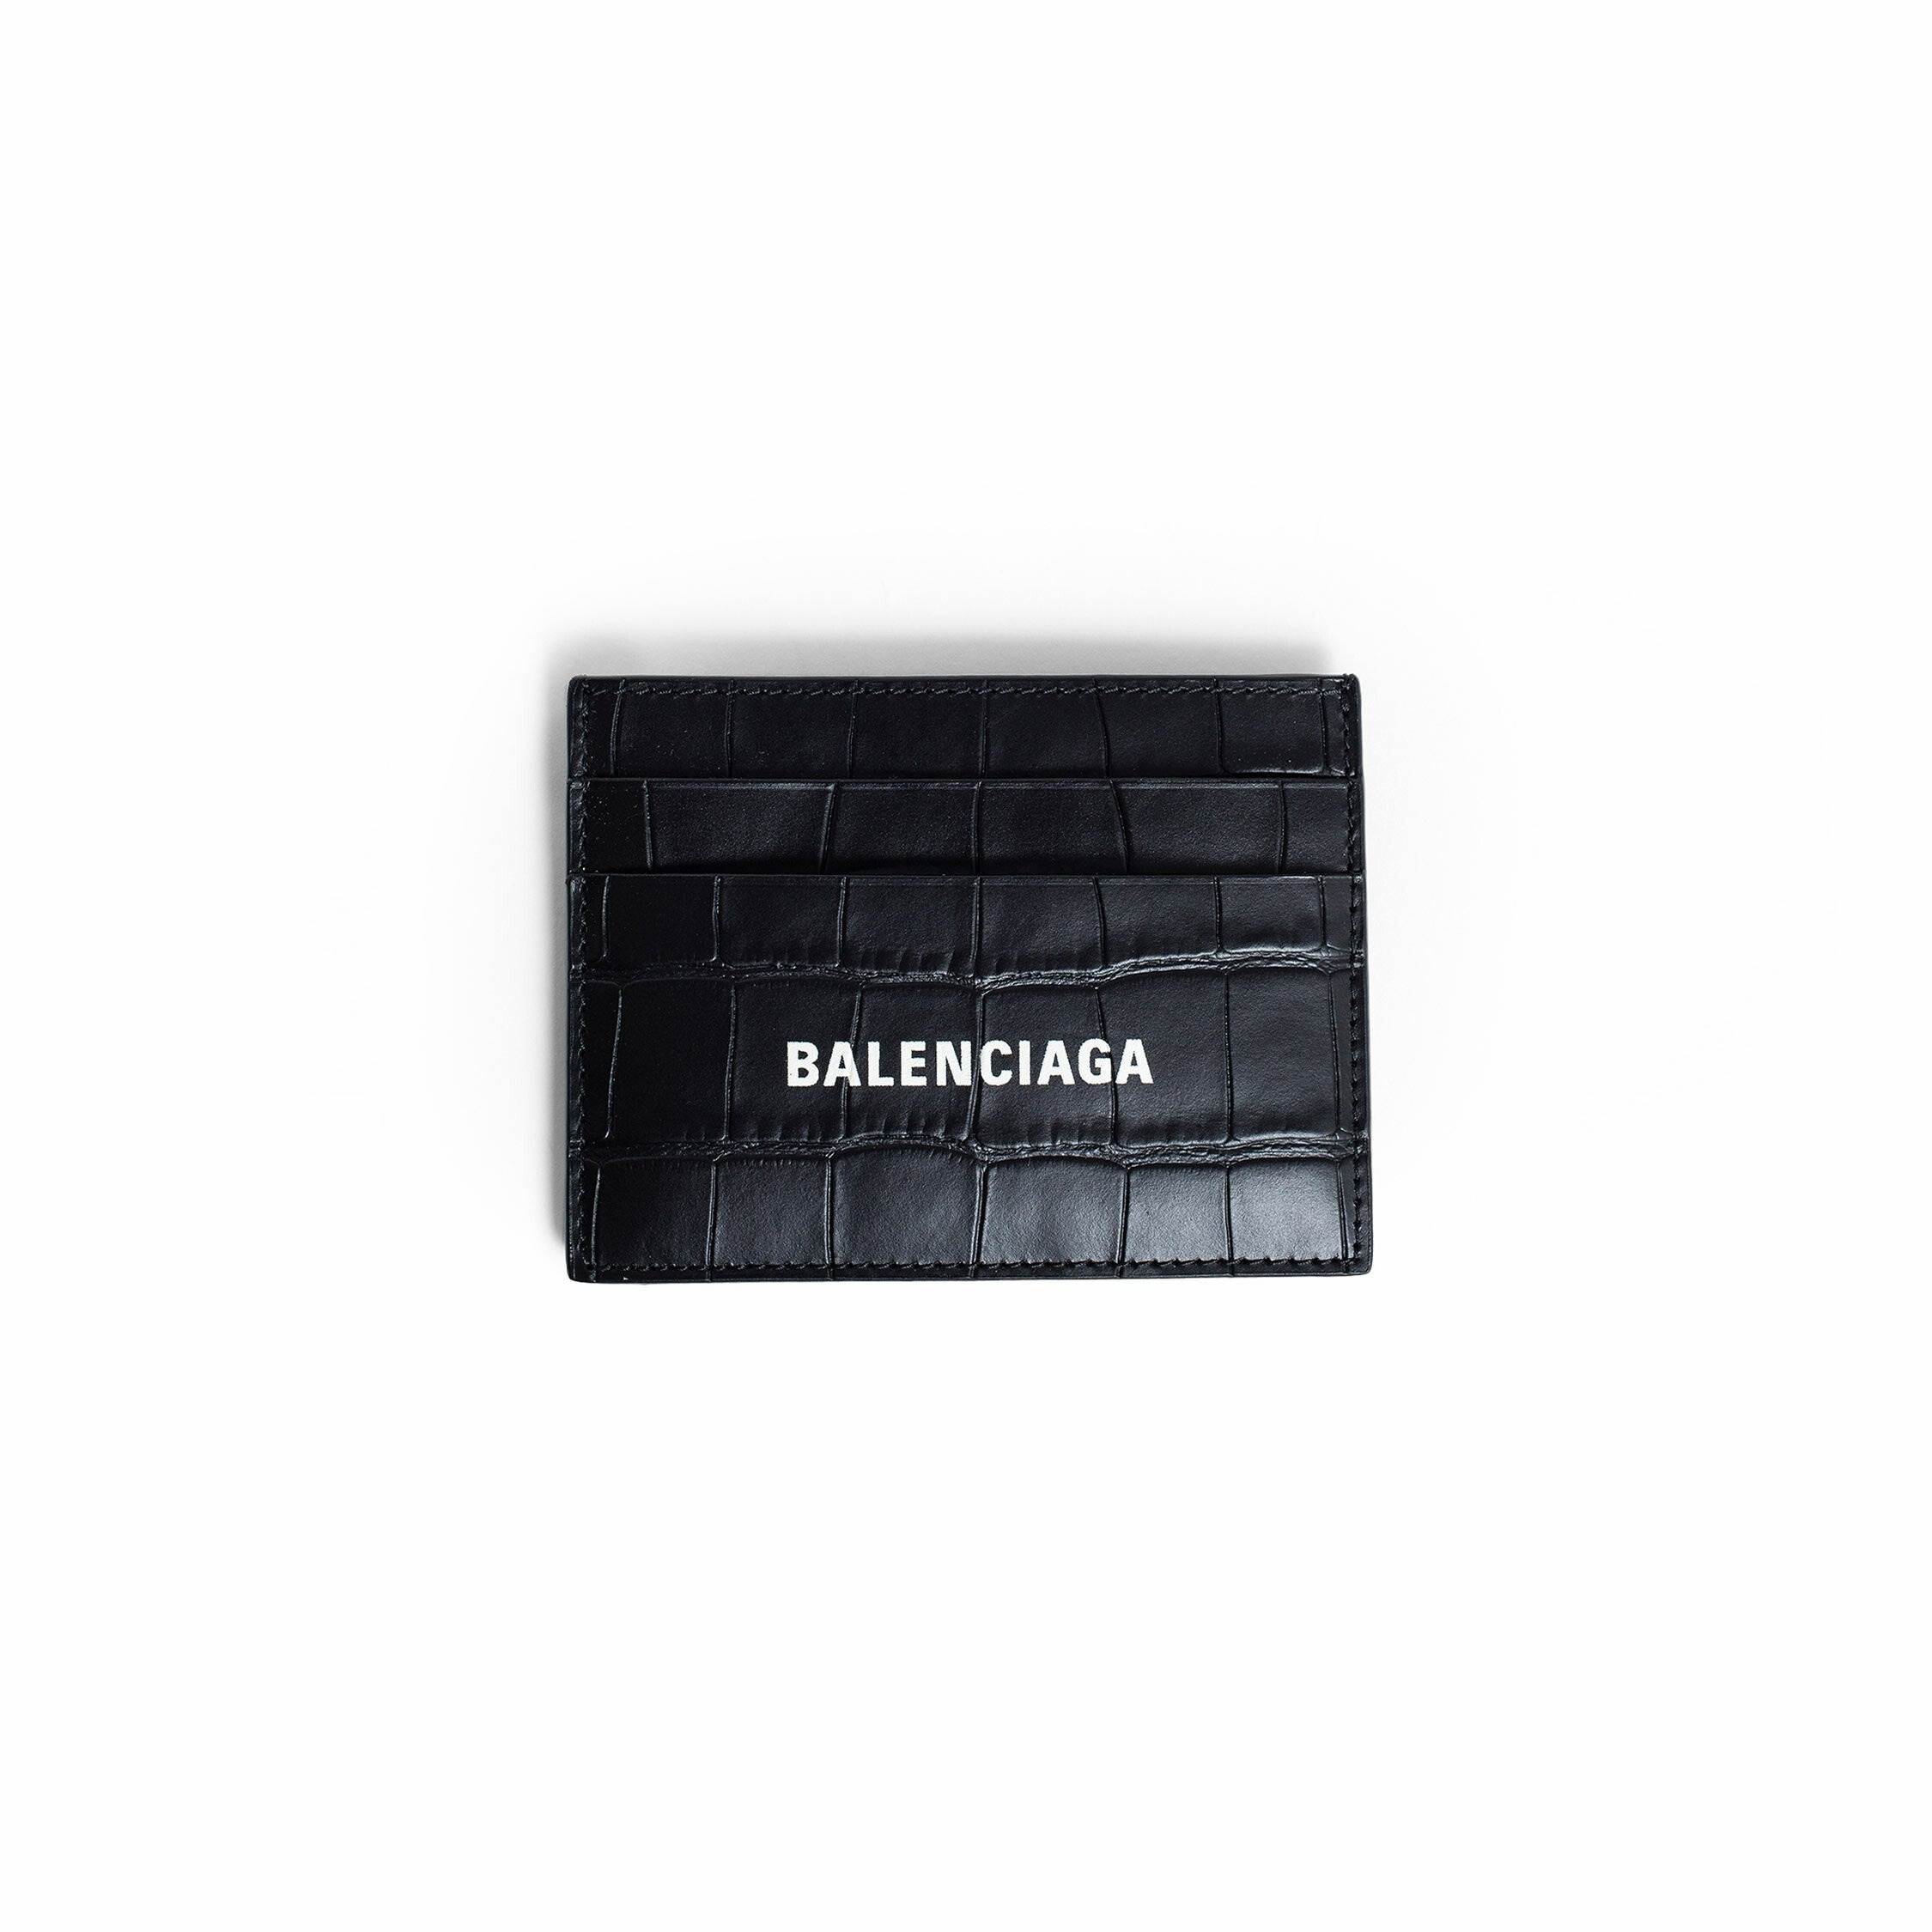 BALENCIAGA UNISEX BLACK WALLETS & CARDHOLDERS - 4